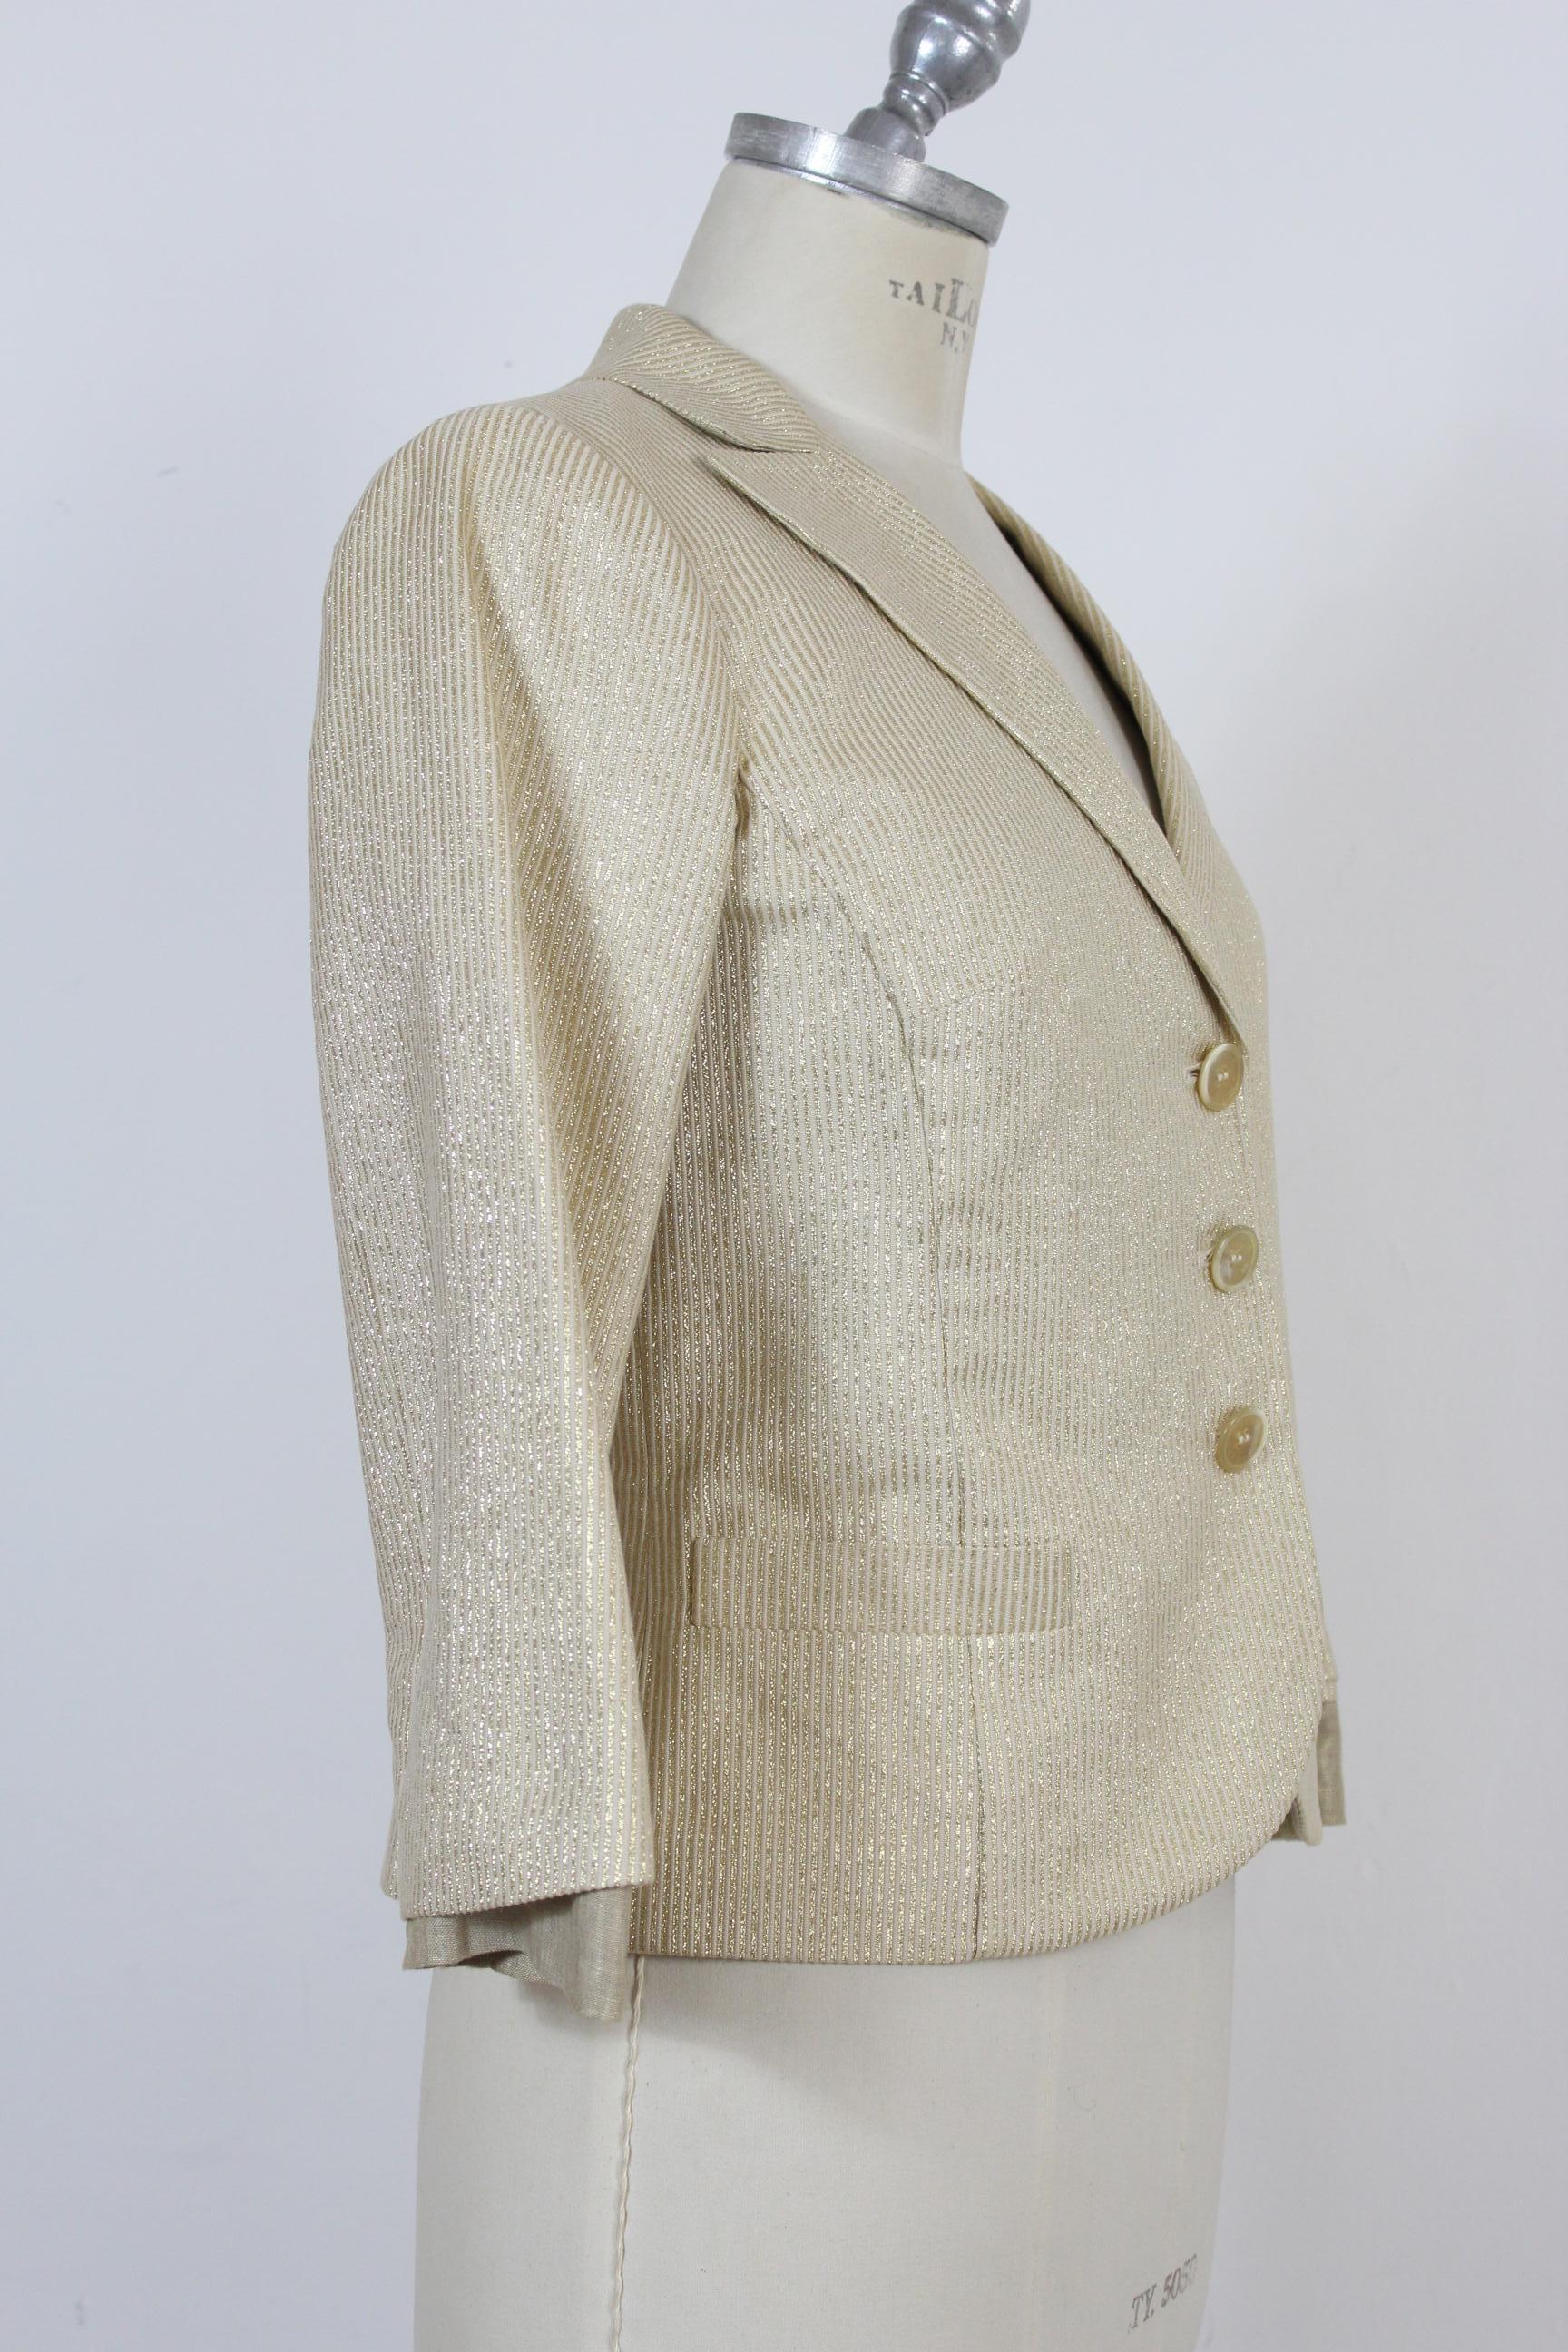 Women's Etro Short Shiny Jacket Beige Gold Pinstripe Insert 3/4 Sleeves 2000s Cotton For Sale